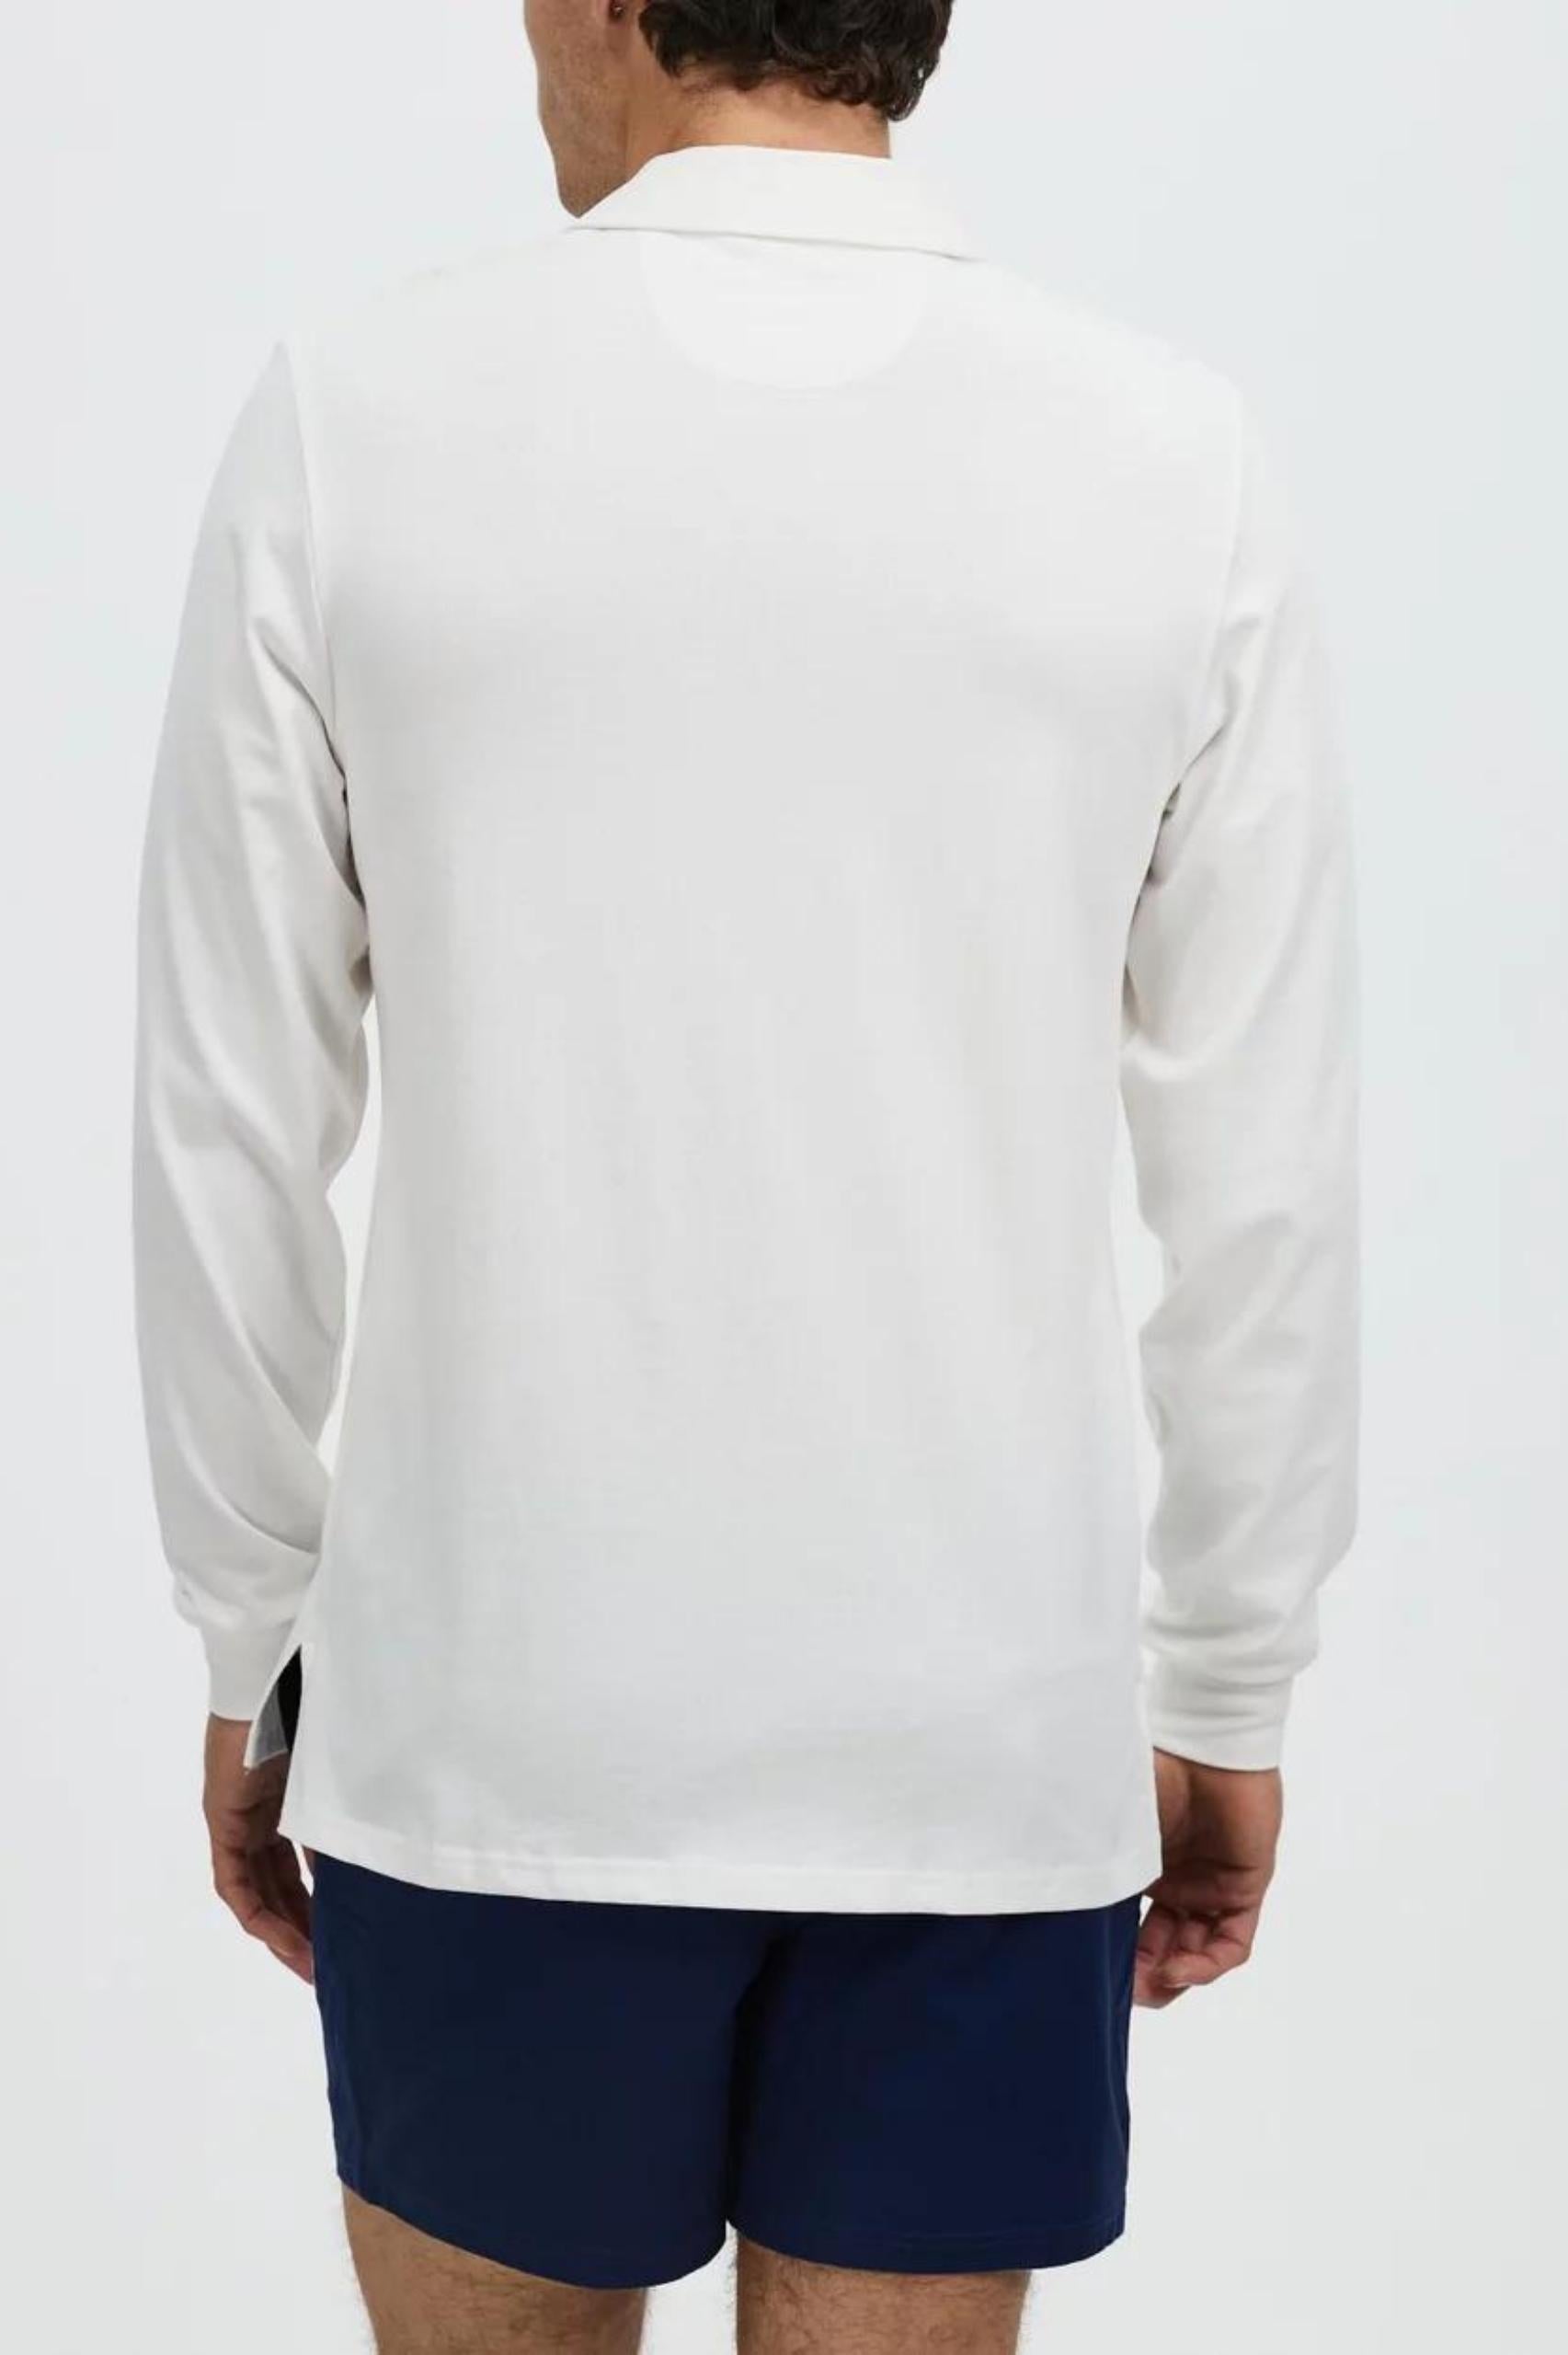 NCAA Berkeley Sailing Club Rugby Shirt - Vintage White